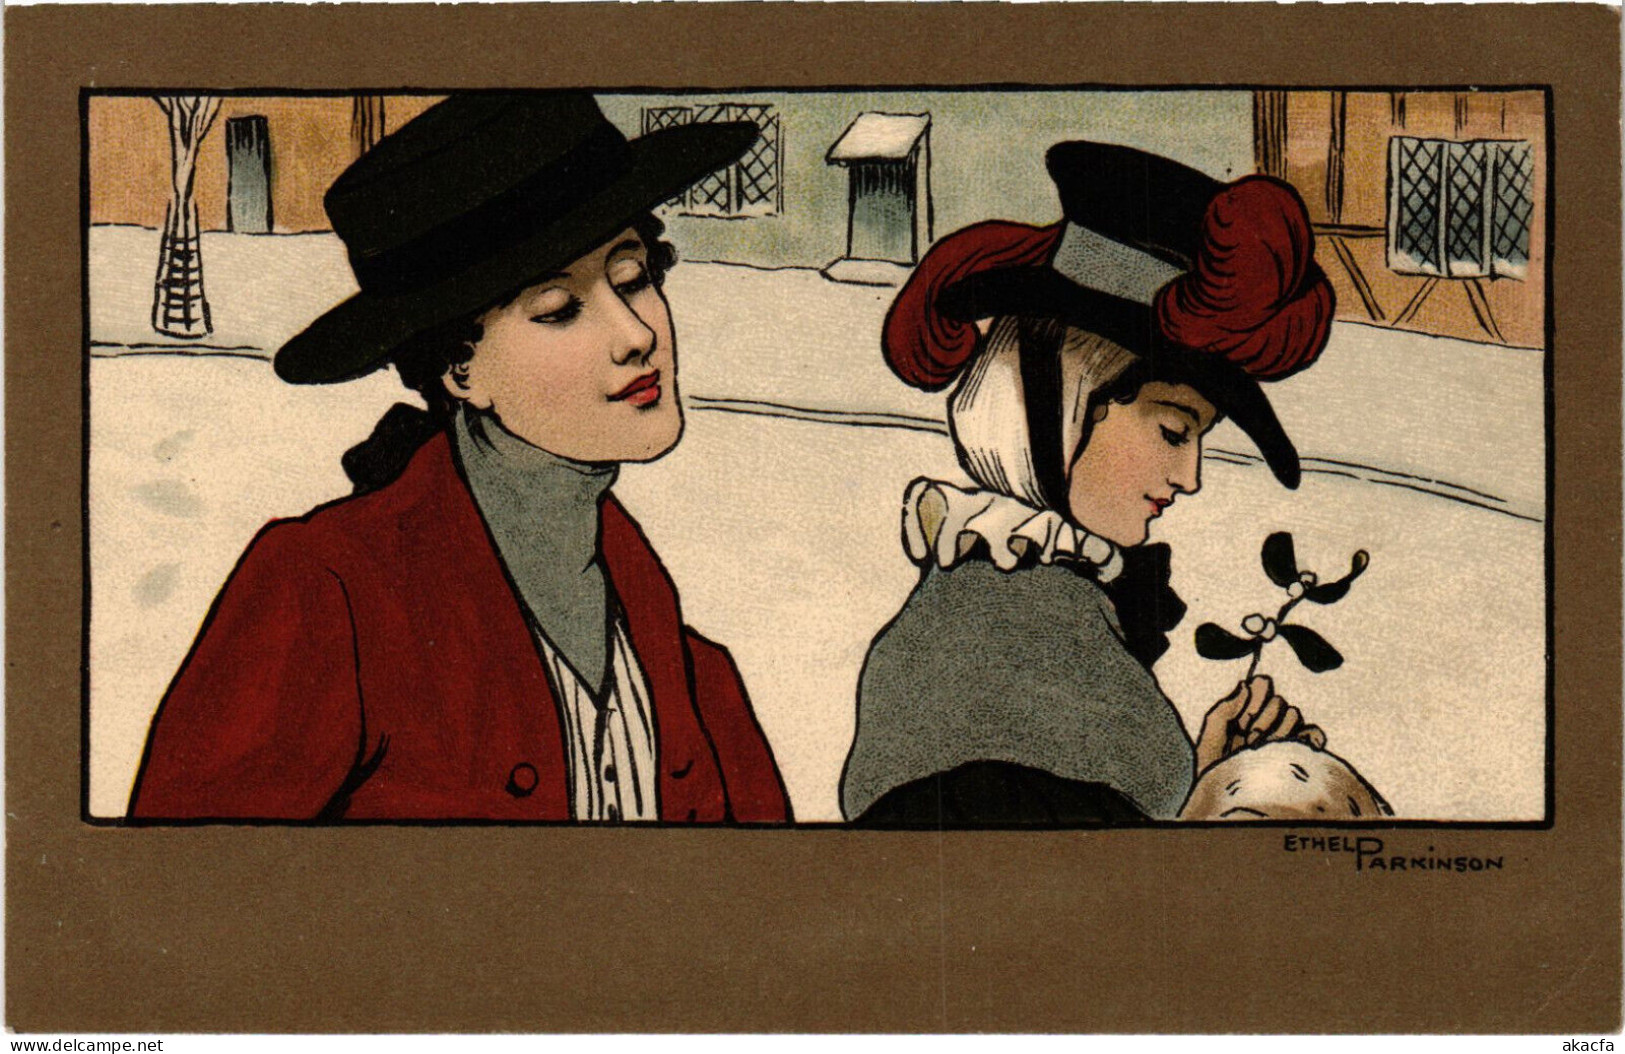 PC ARTIST SIGNED, PARKINSON, TWO LADIES IN THE SNOW, Vintage Postcard (b52985) - Parkinson, Ethel